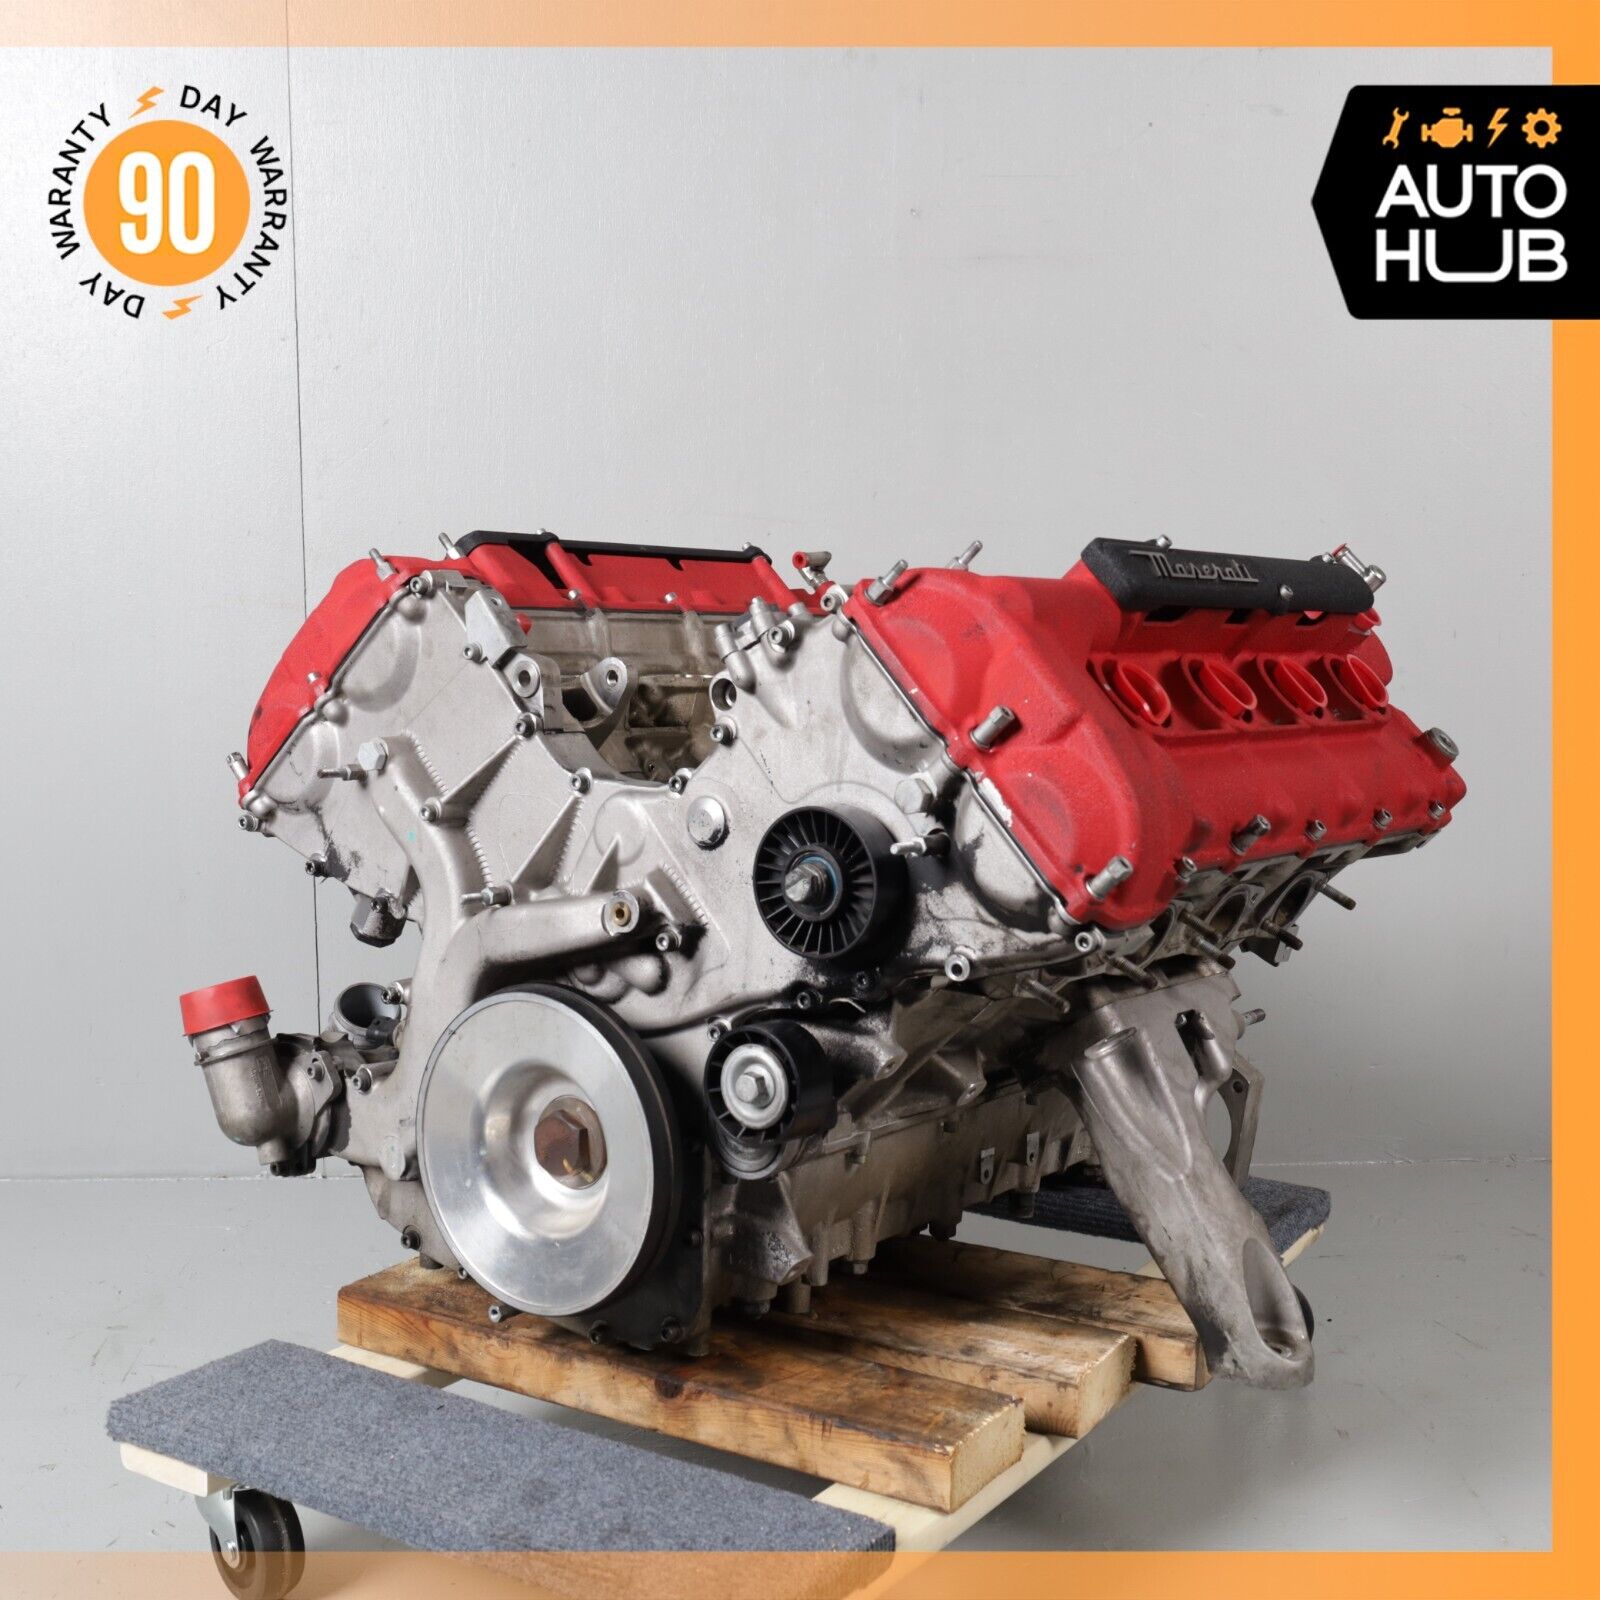 05-07 Maserati Quattroporte M139 4.2L V8 F136 F1 Engine Motor Assembly OEM 51k